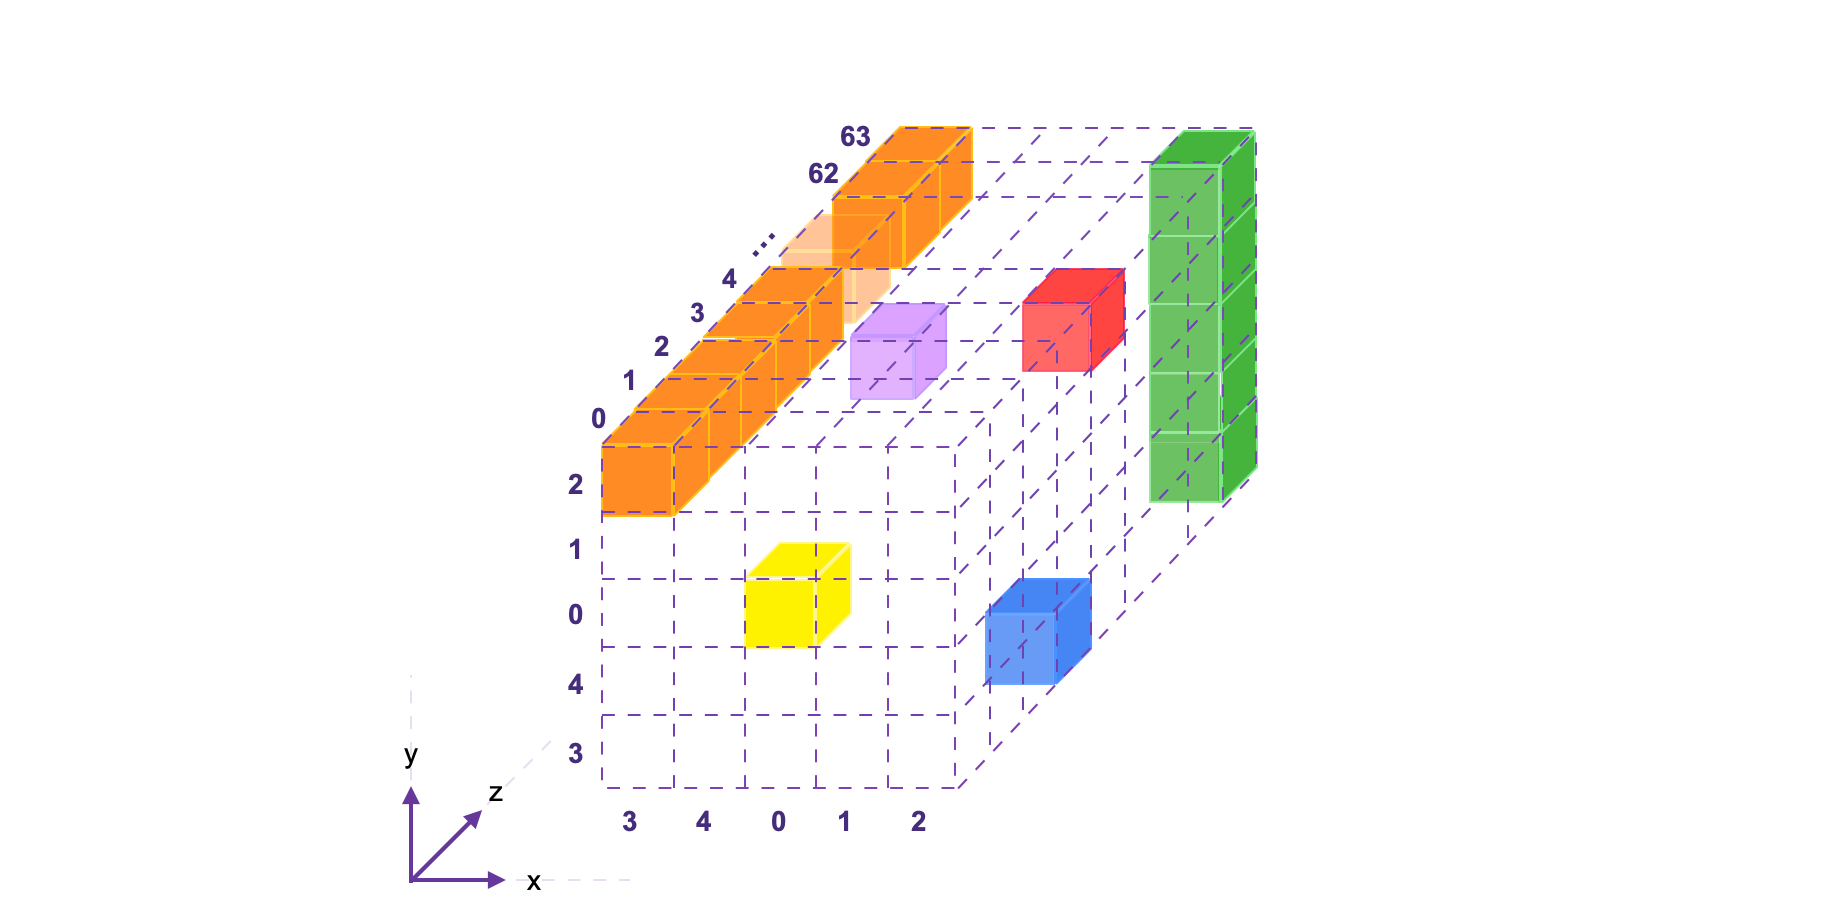 Figure 1: Keccak's 1600-bit State as a 3D Array